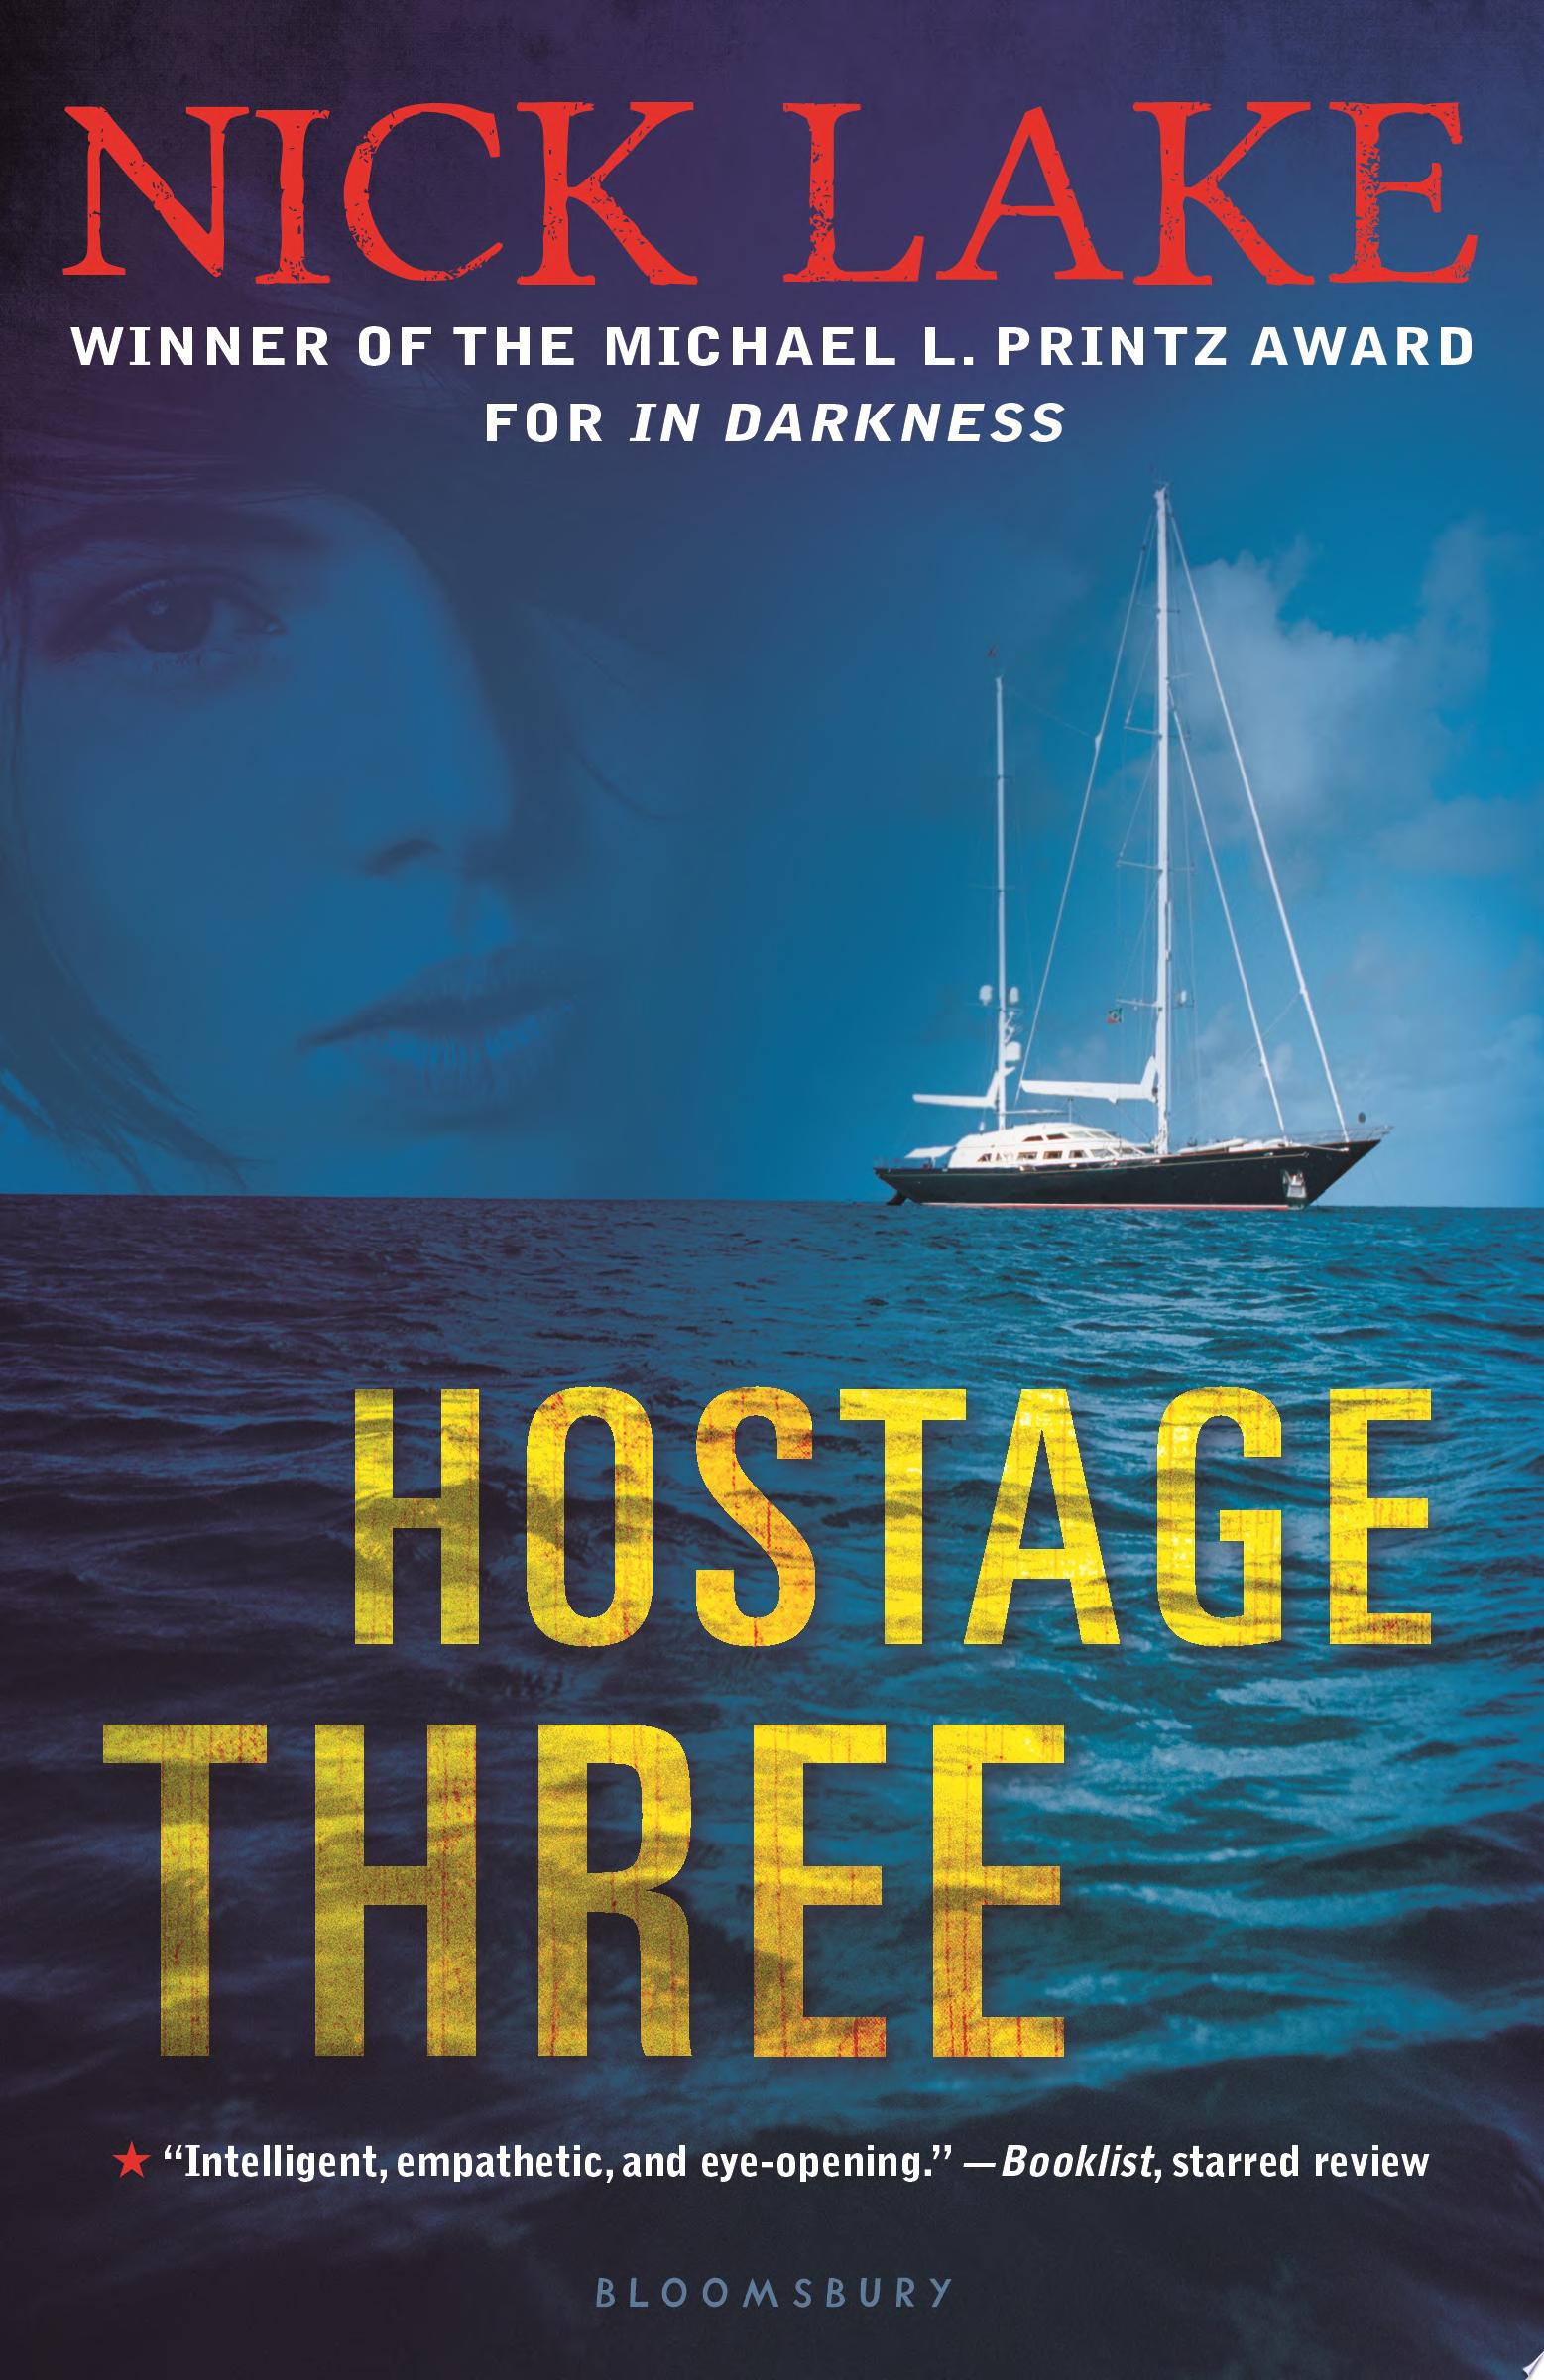 Image for "Hostage Three"